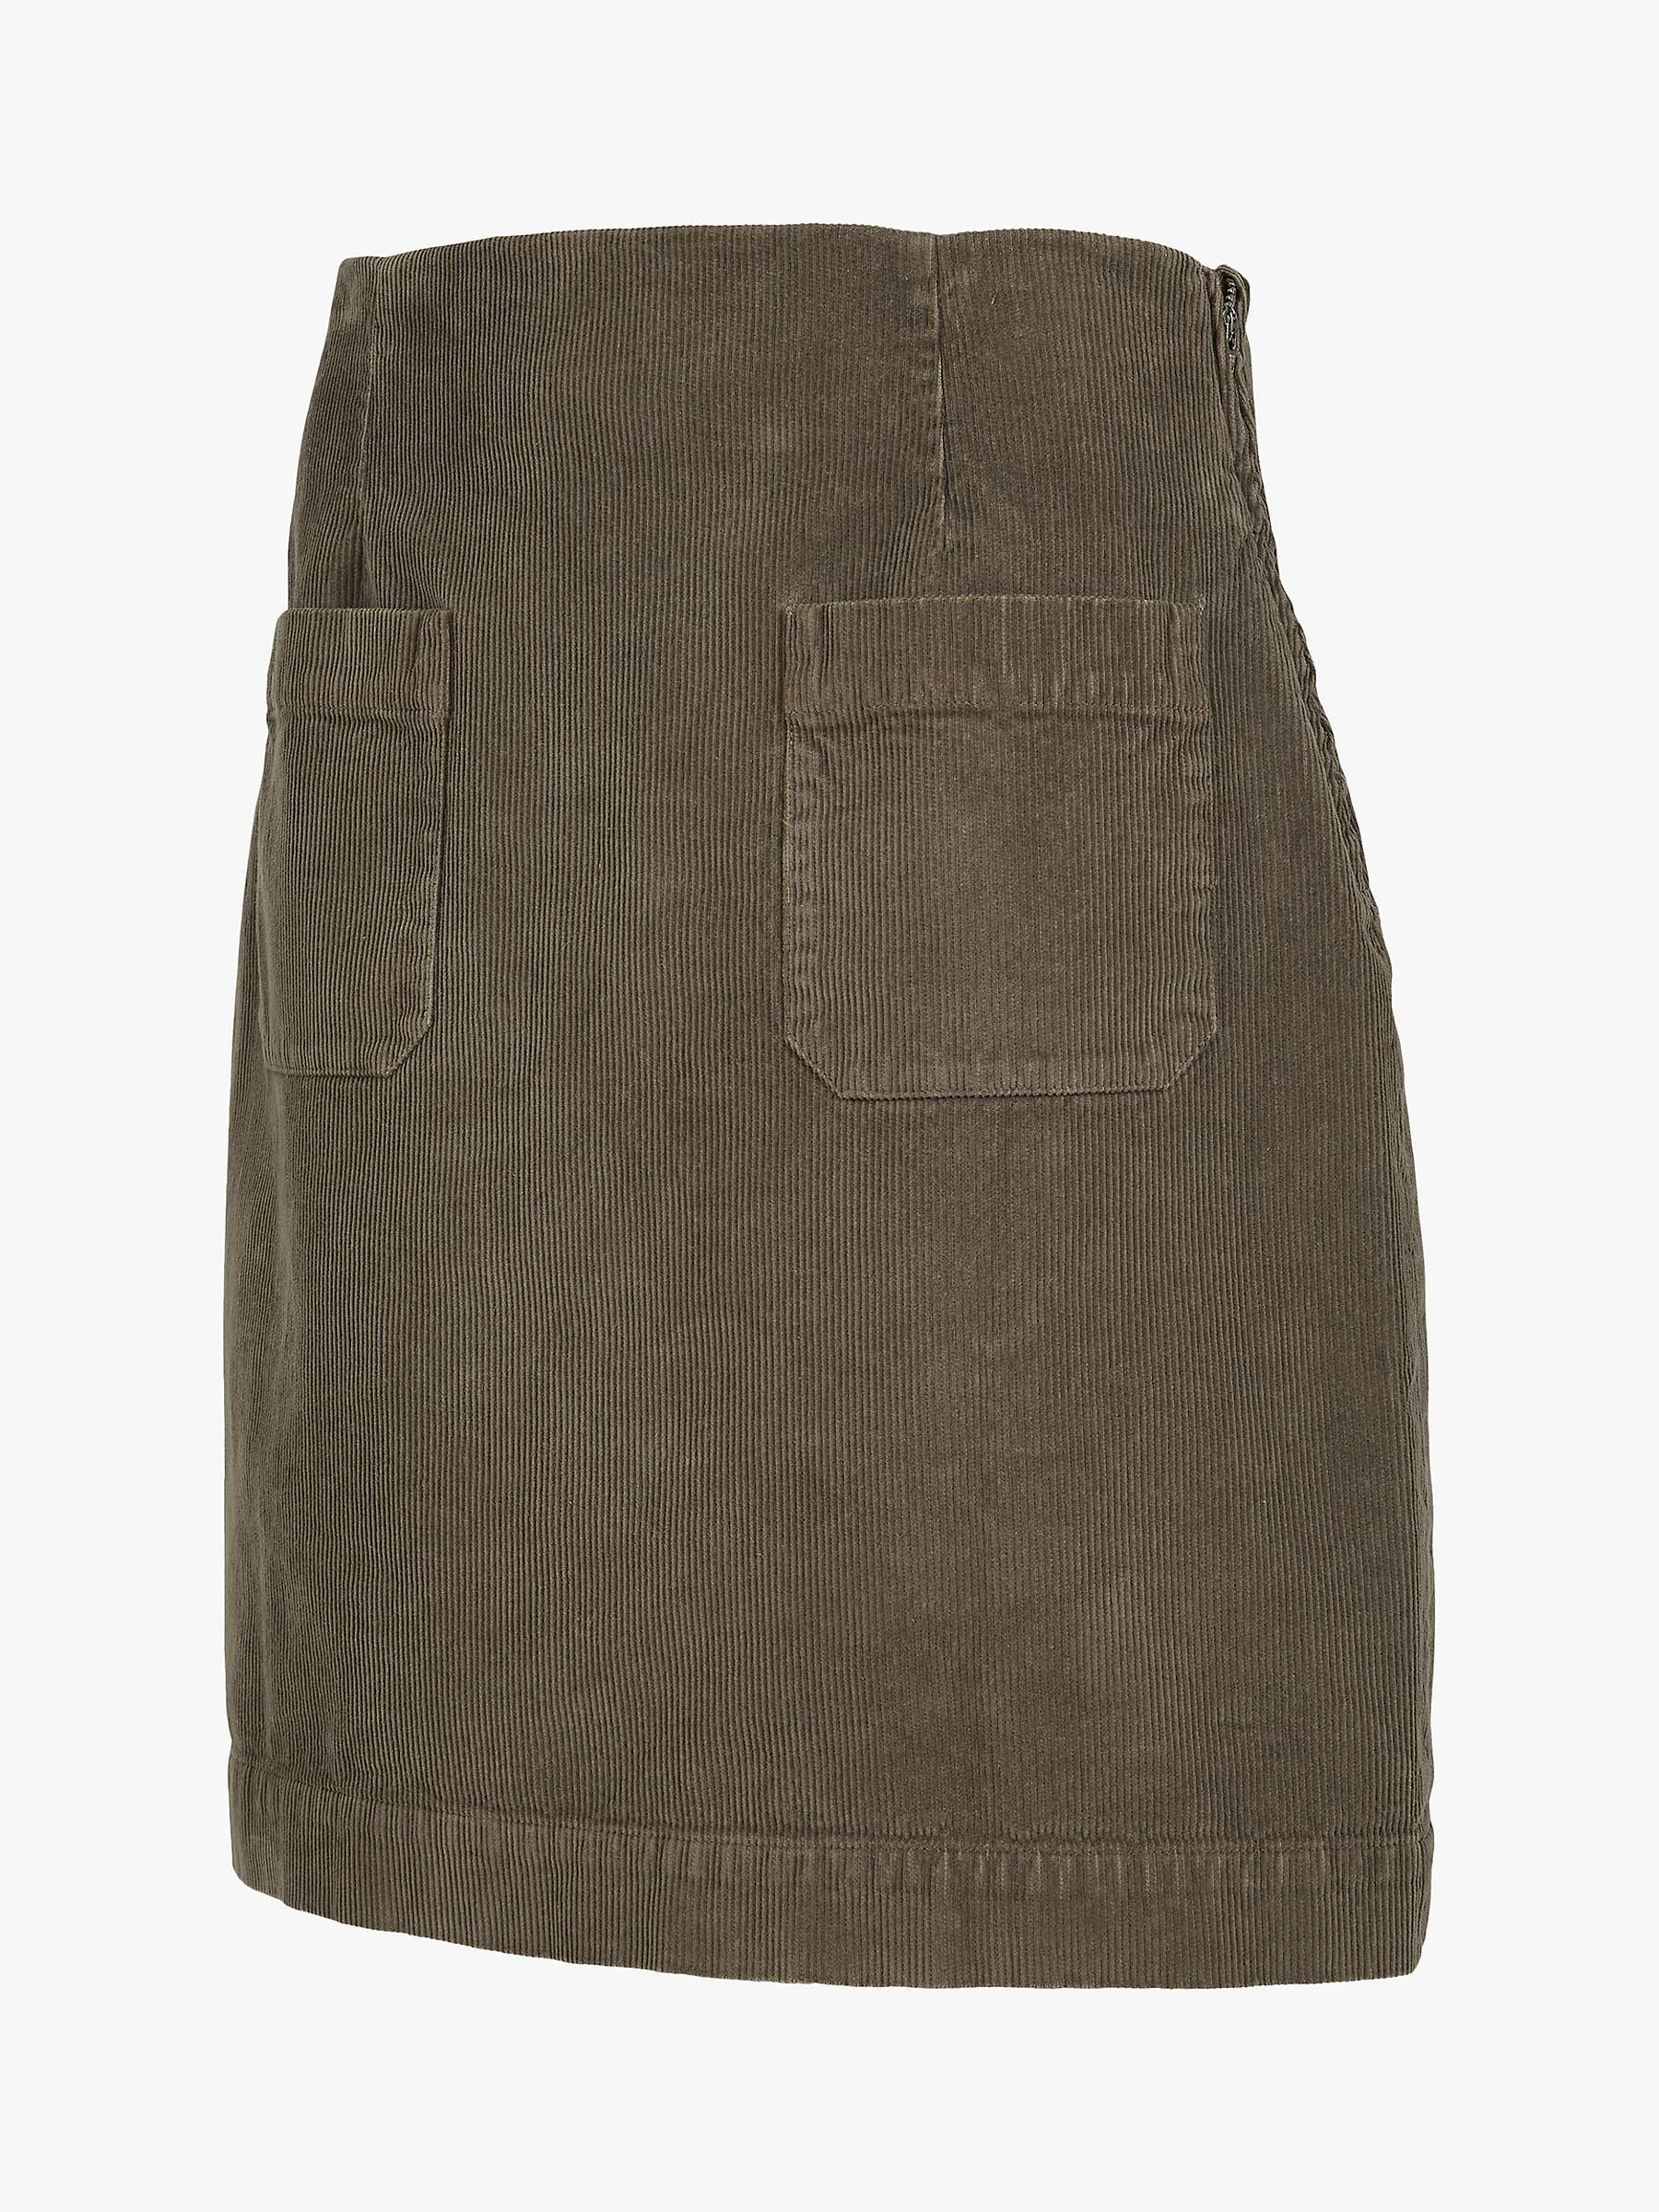 Buy Celtic & Co. Cotton Corduroy Knee Length Skirt, Mushroom Online at johnlewis.com